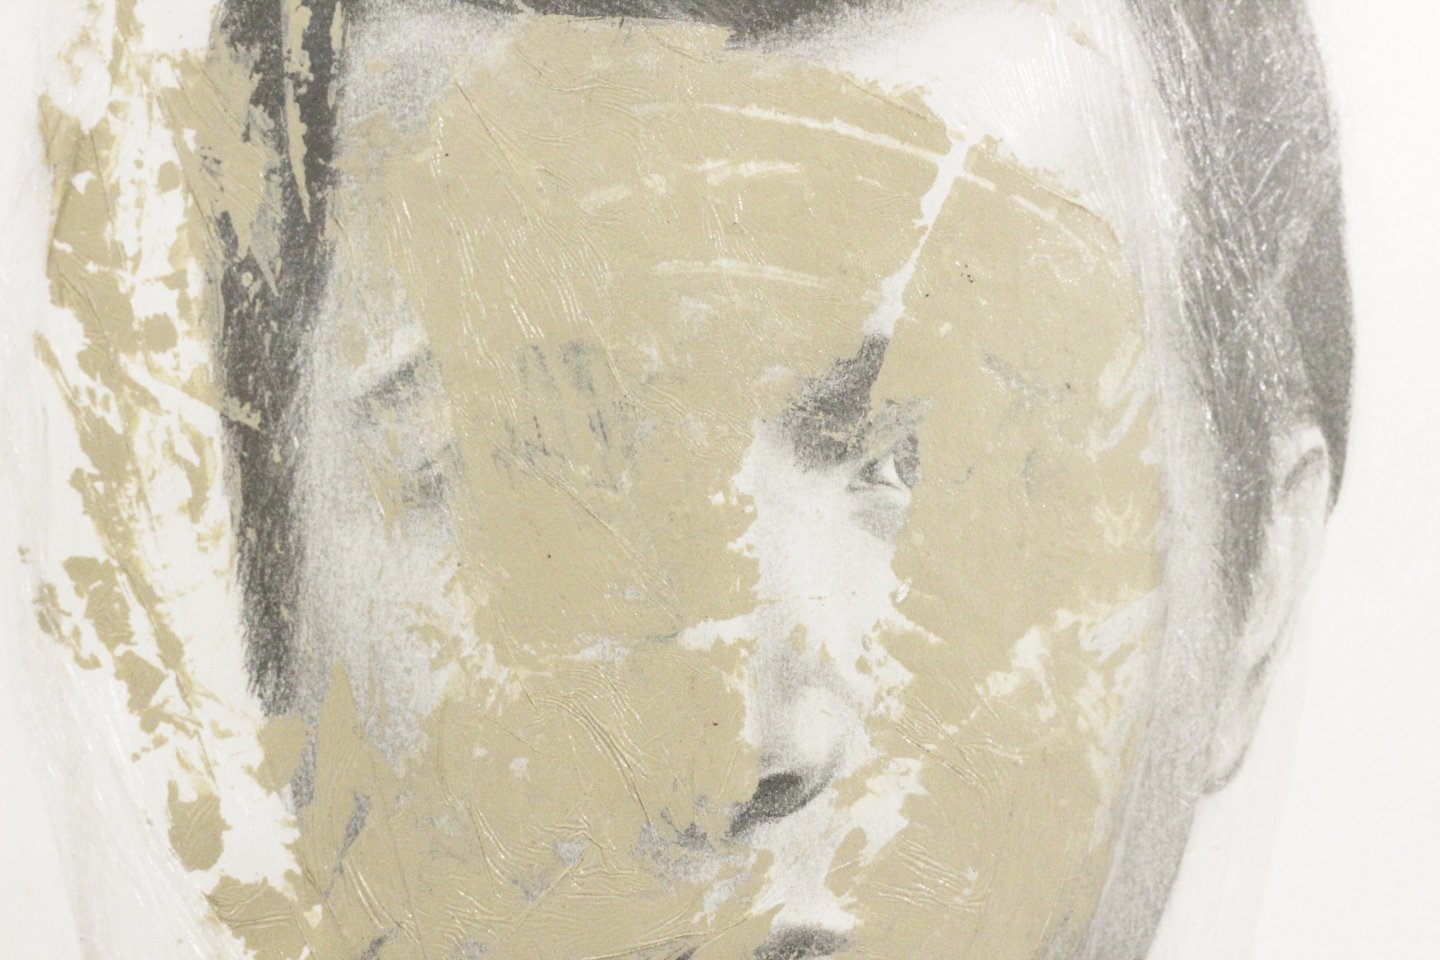 Galerie Benjamin Eck München CATARINA MANTERO 'Mask I', graphite, acrylic and cellophane on paper, 42cm x 30cm, 2015